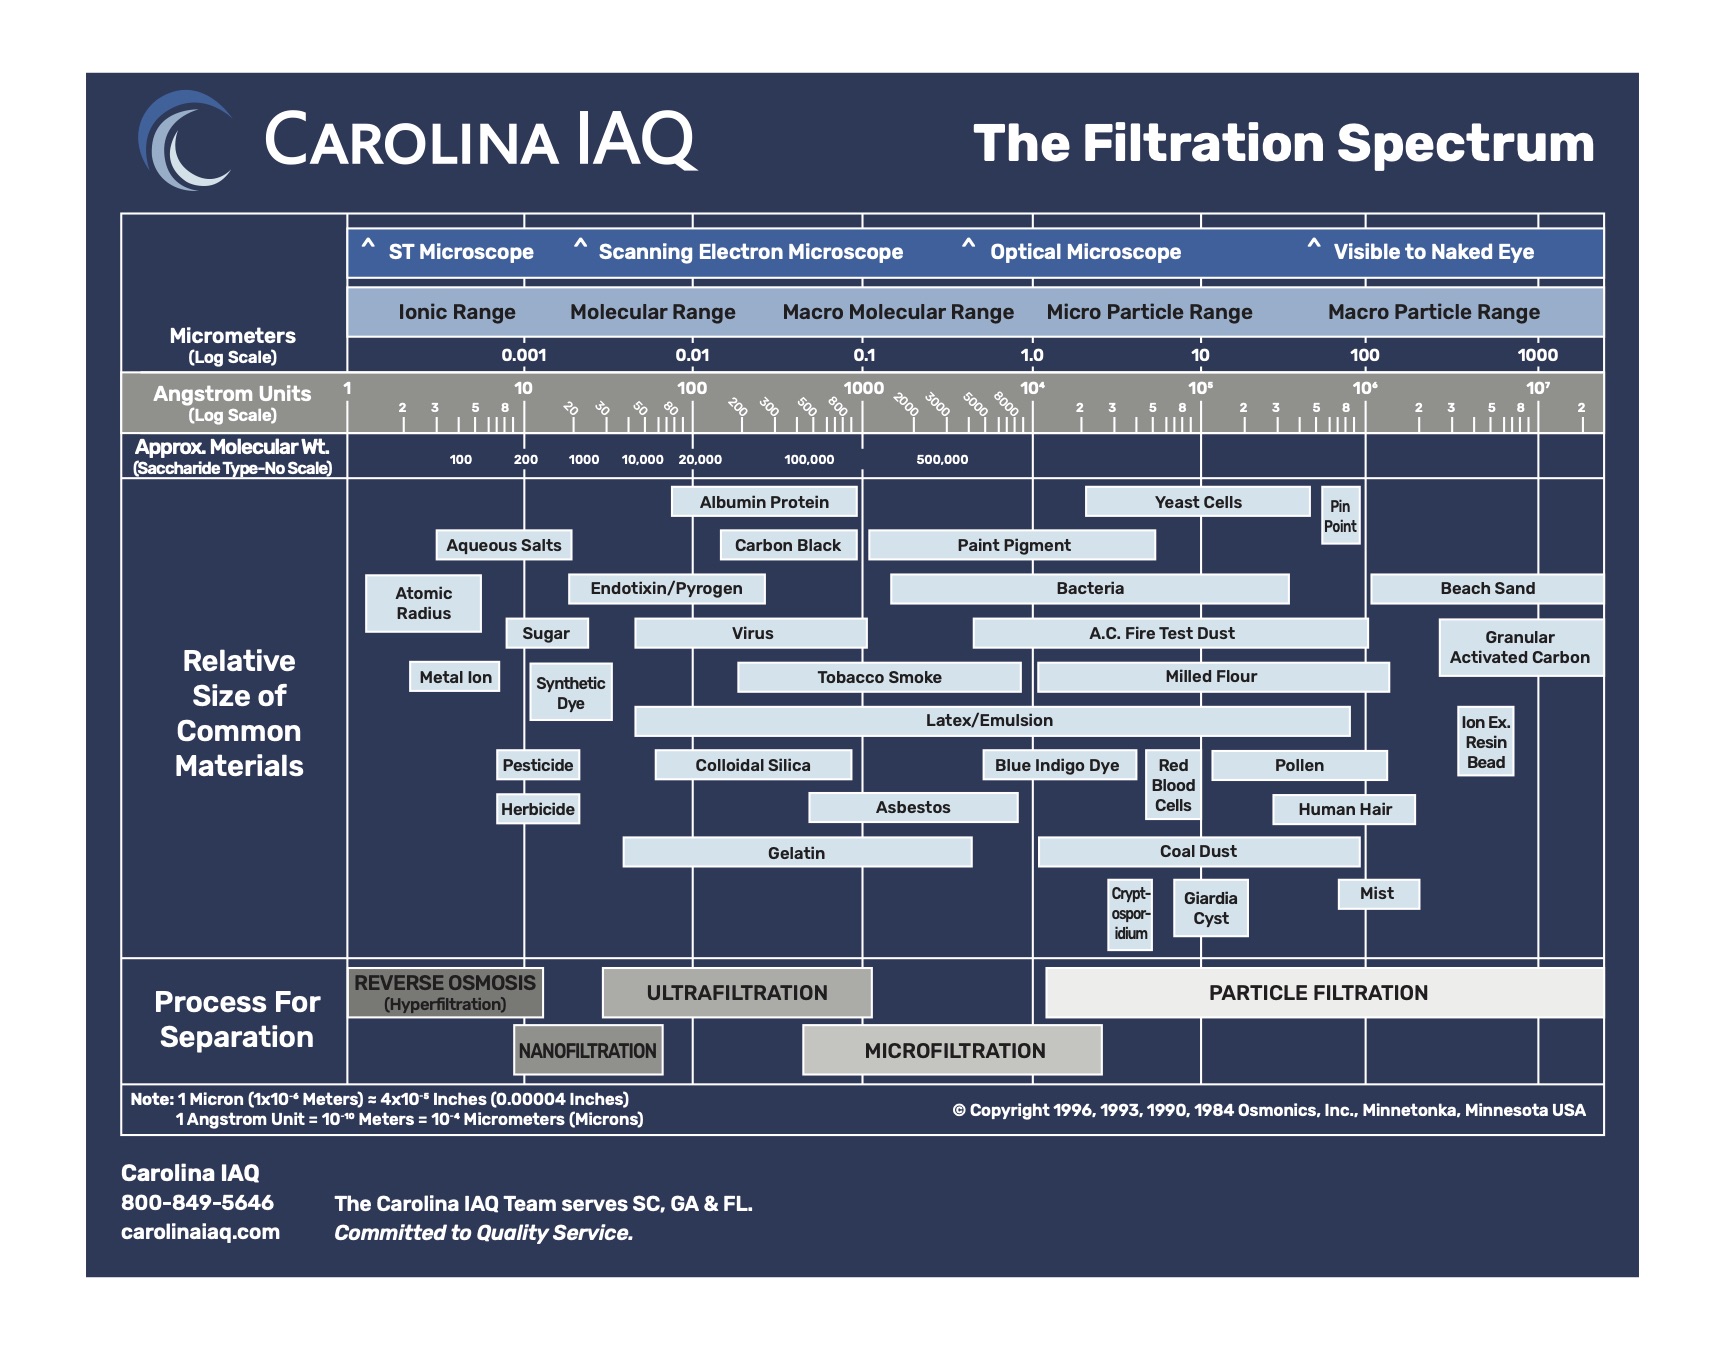 Carolina IAQ filtration spectrum graphic